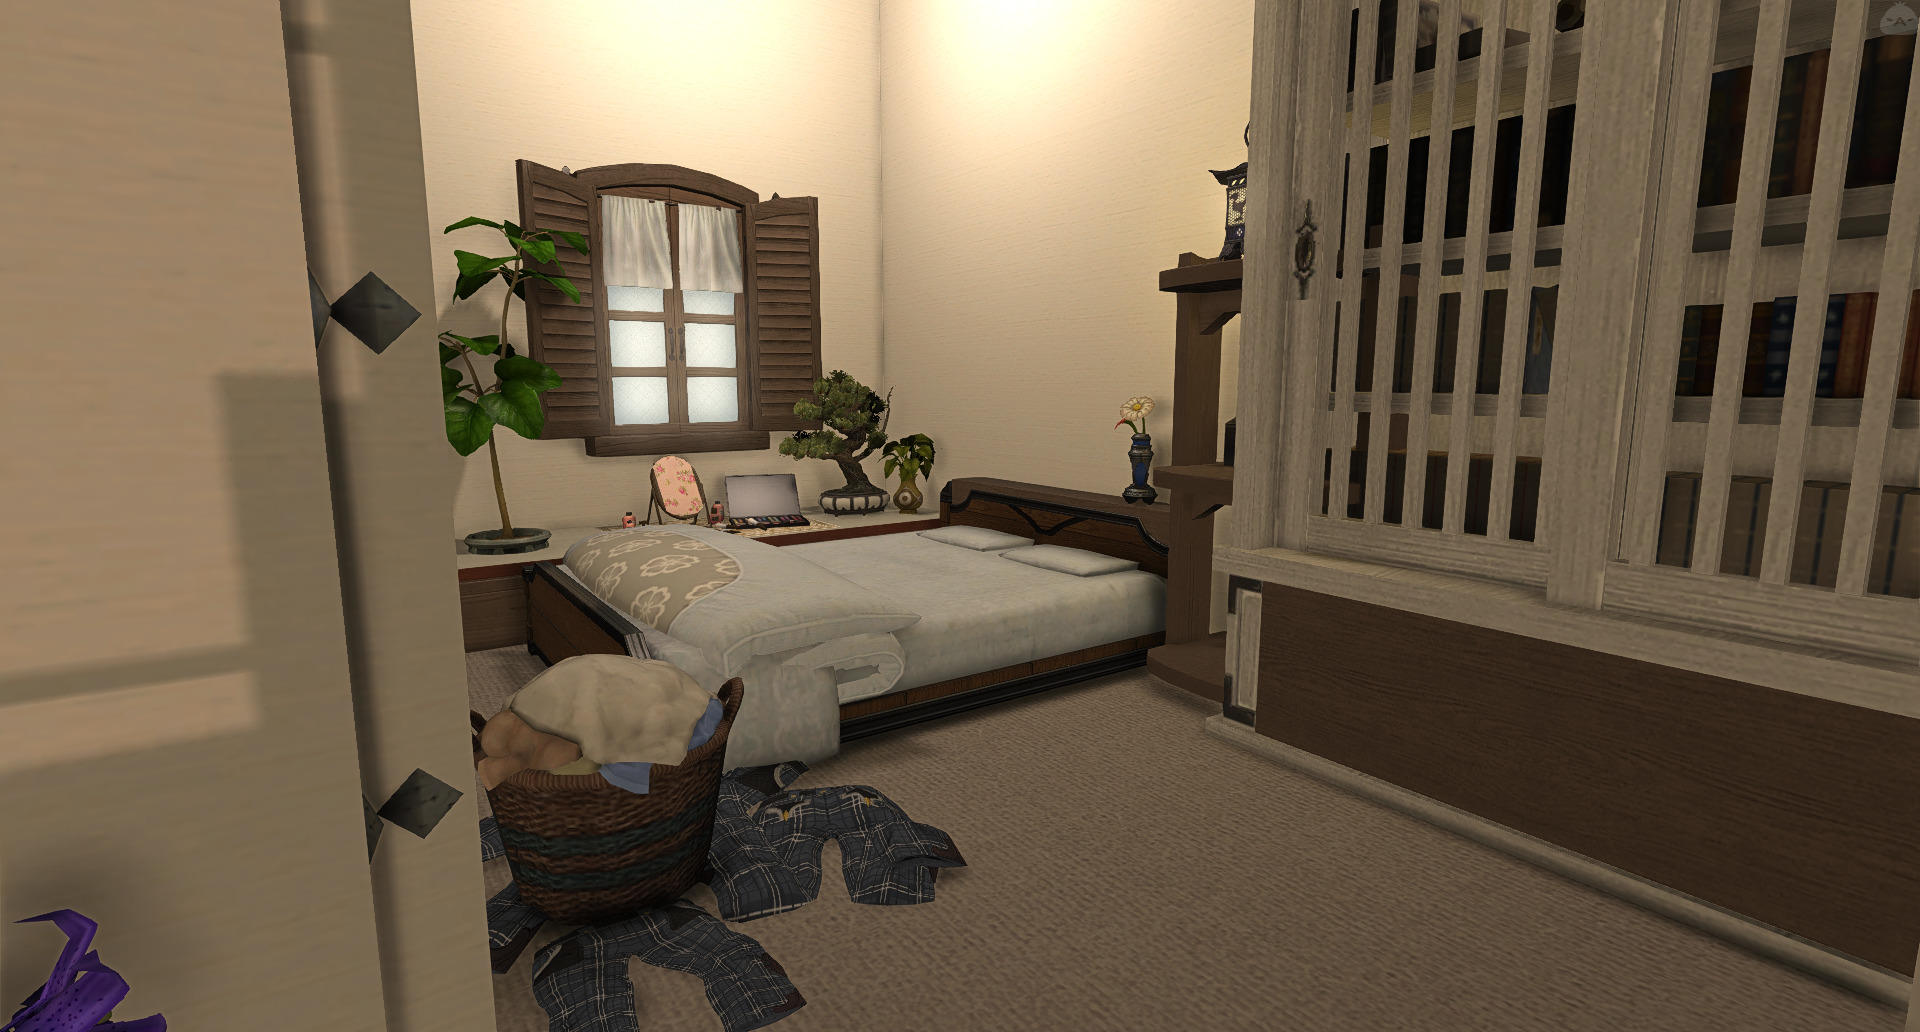 Ffxiv Housing Bedroom Ideas Design Corral